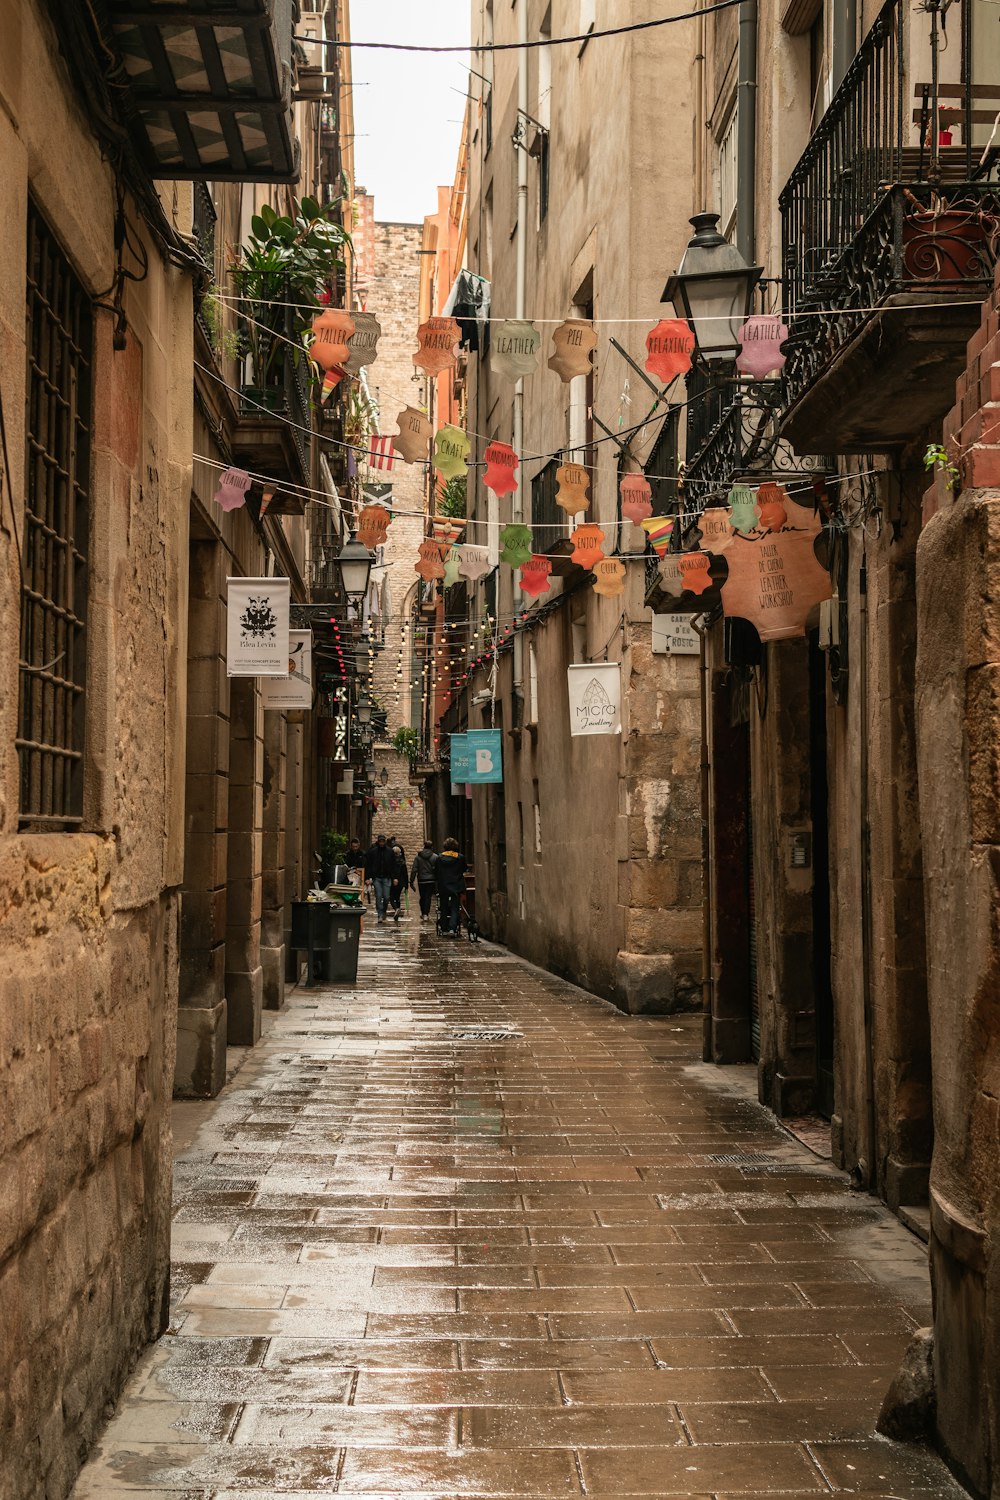 a narrow city street with a few people walking down it